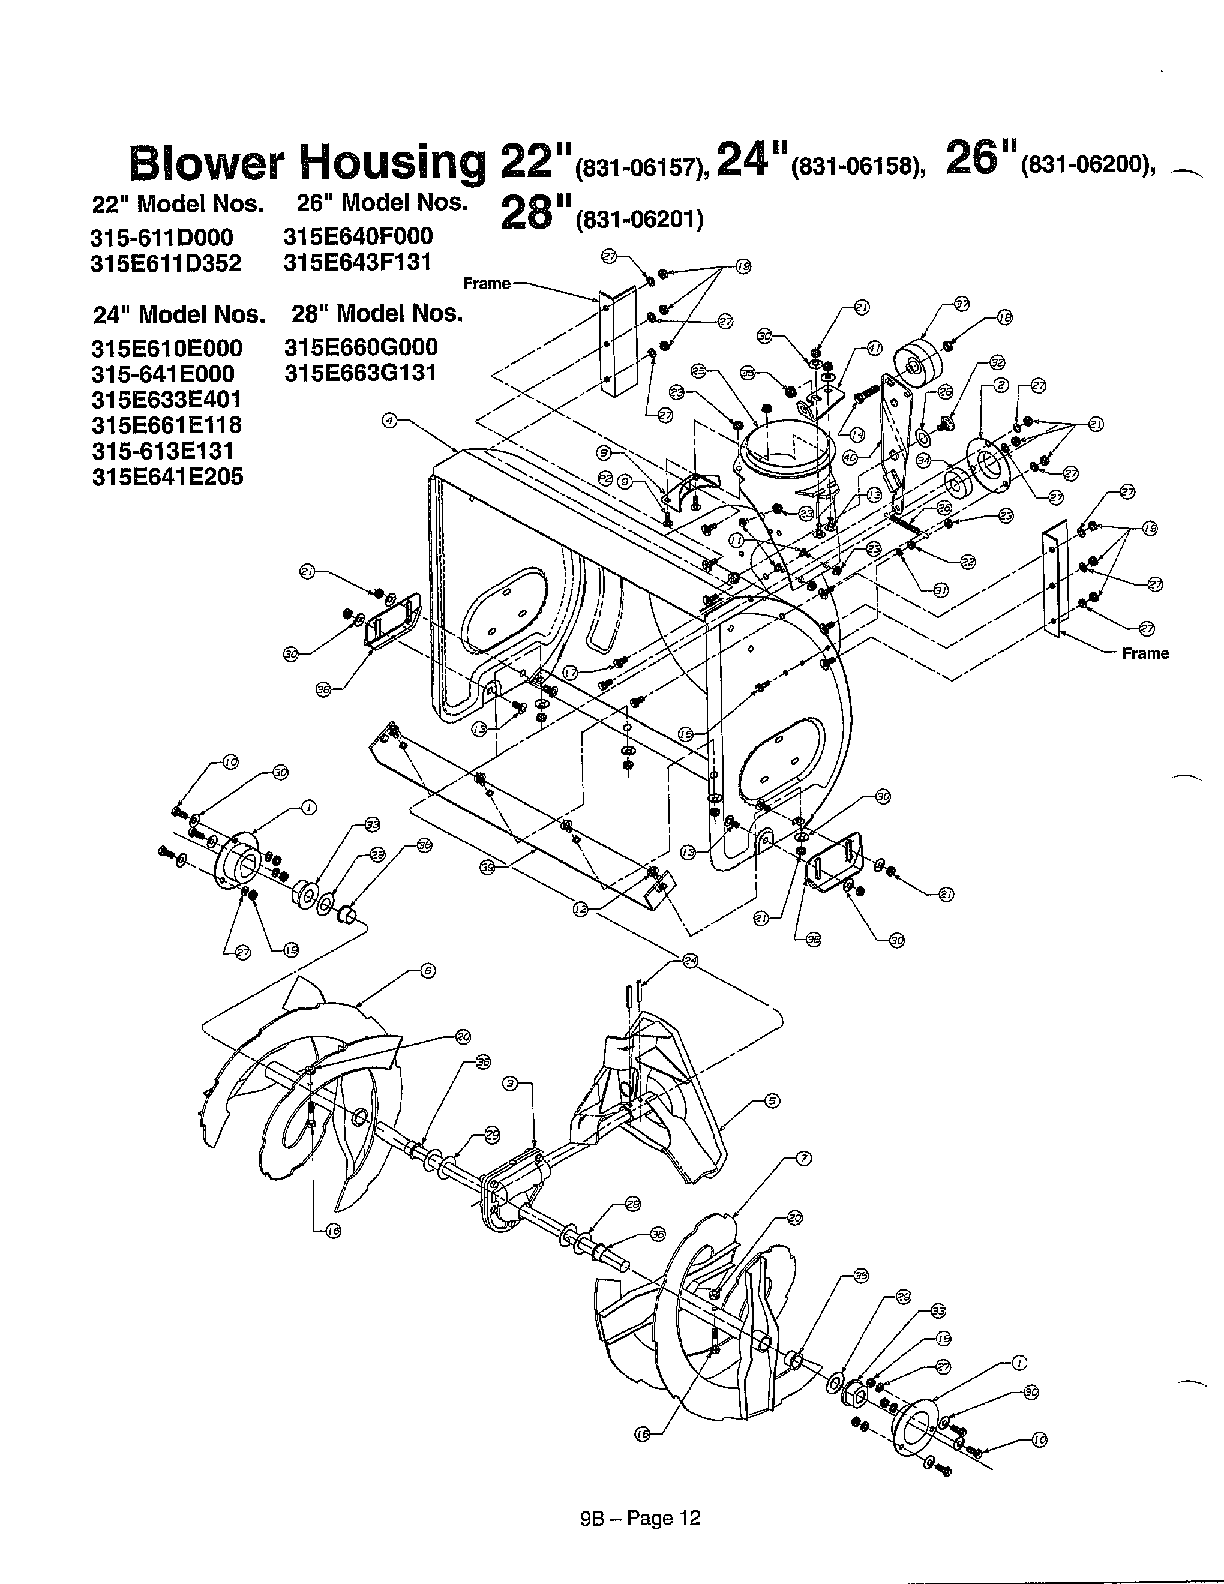 Blower Housing 26  Diagram  U0026 Parts List For Model